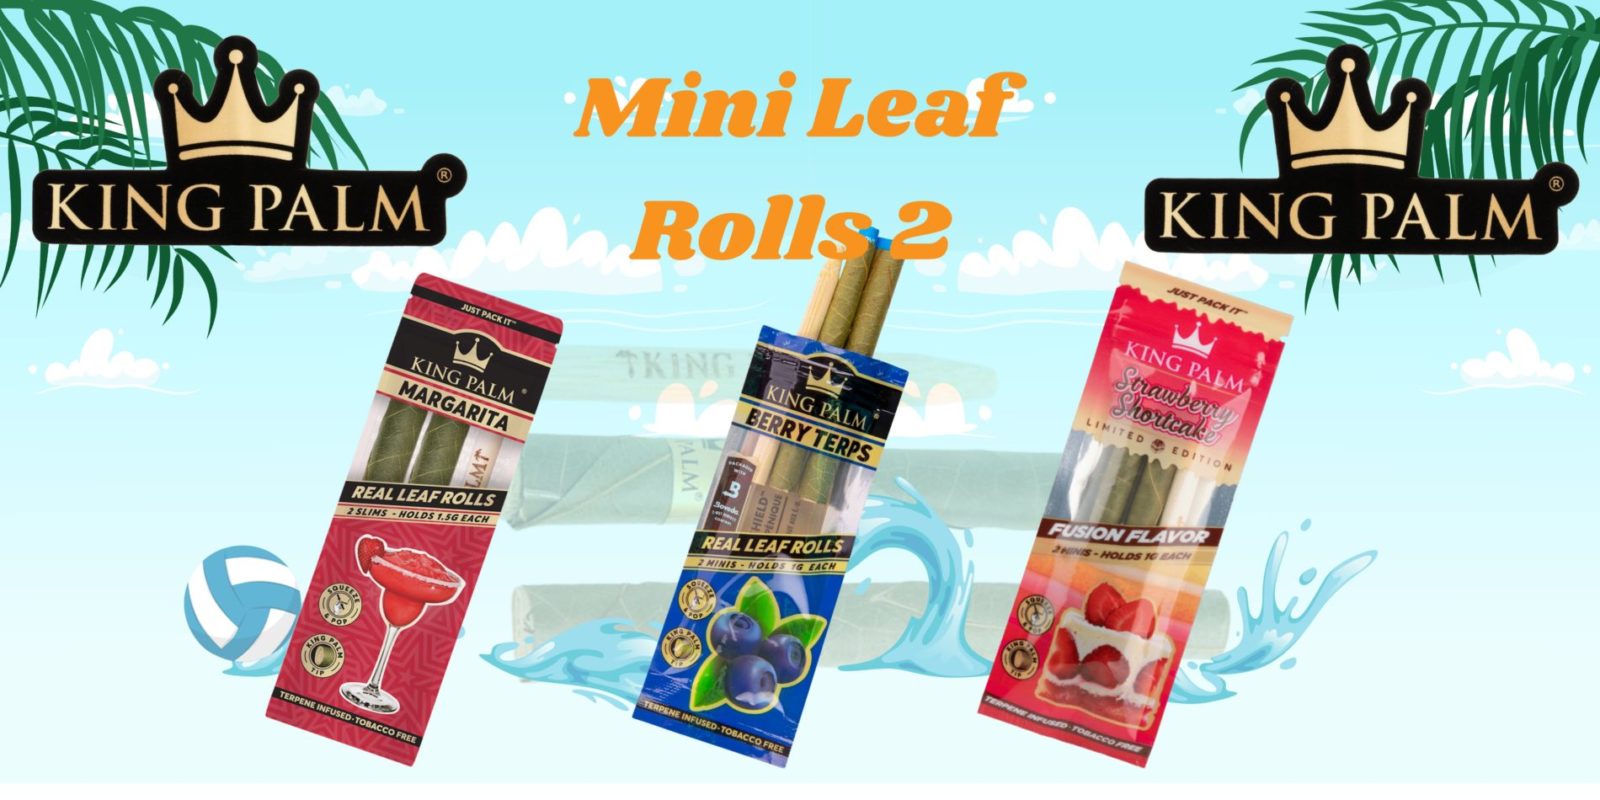 King Palm Mini Leaf Rolls 2 – Pumpkin Cream 420 SUPPLIES - XMANIA Ireland 13